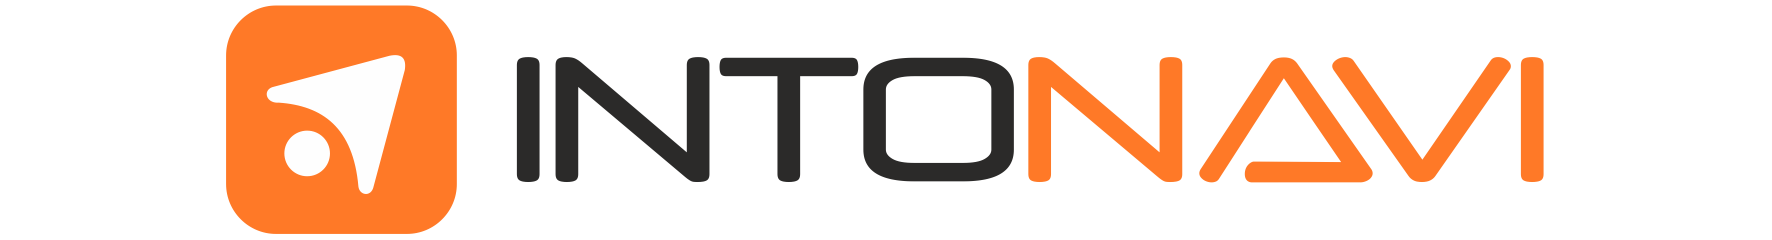 logo INTONAVI